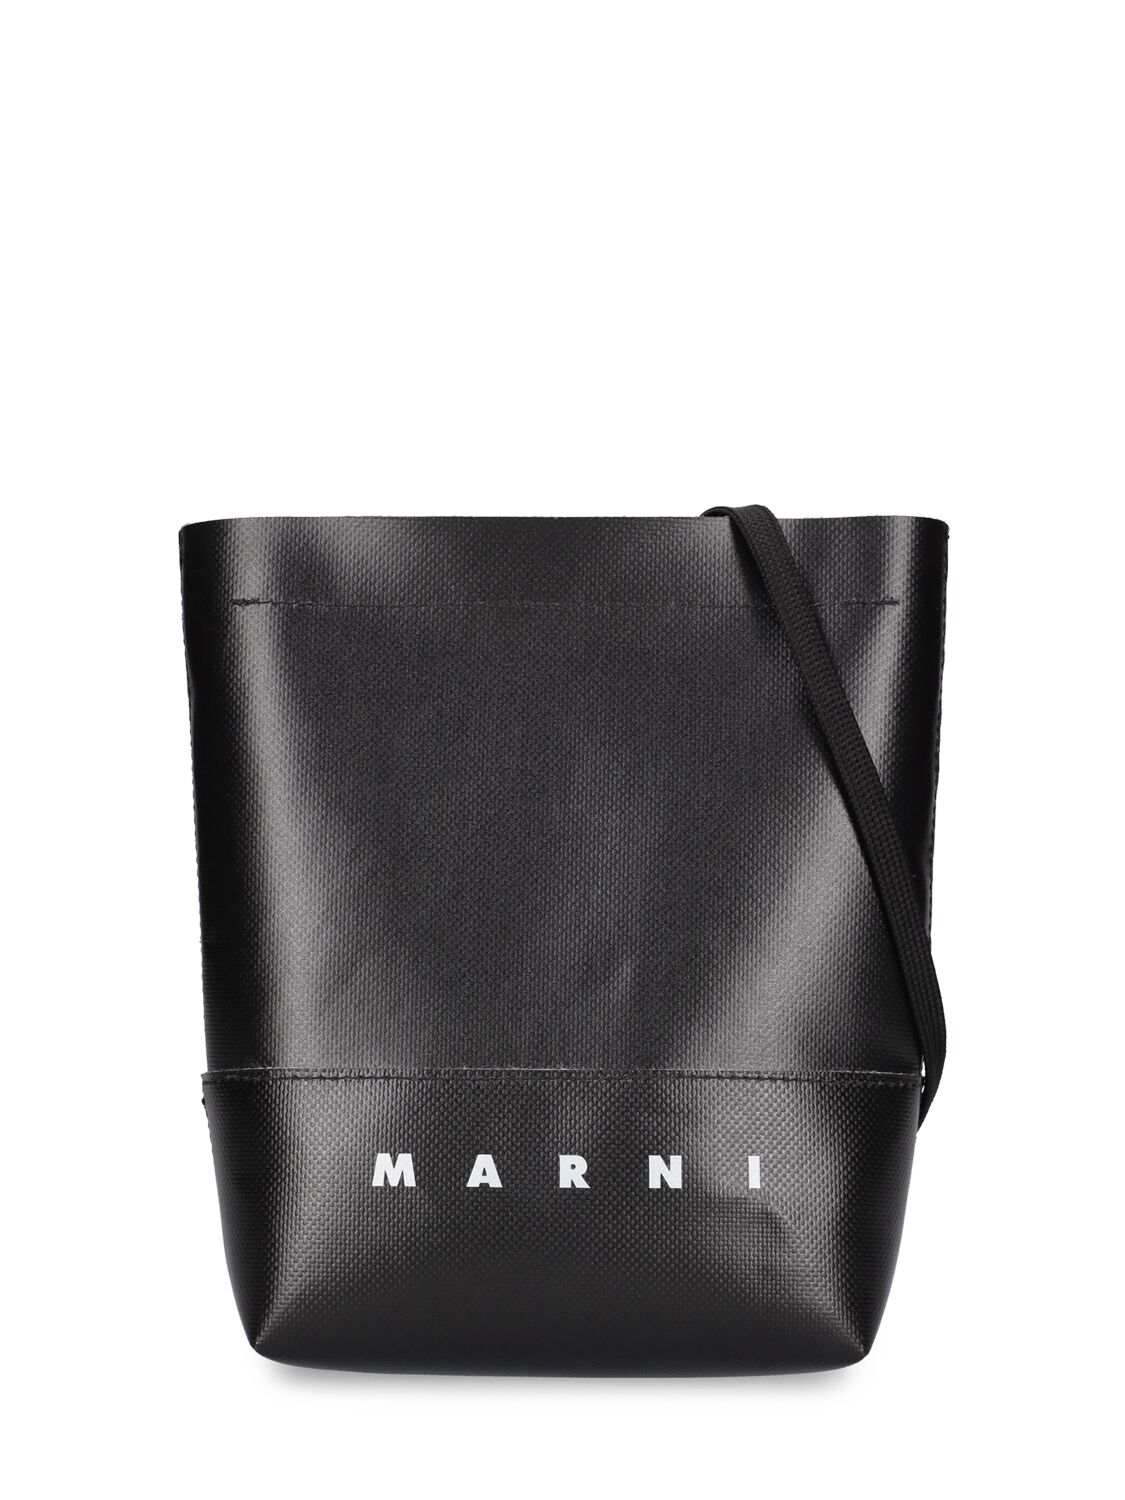 Marni Logo Tpu Crossbody Bag In Black